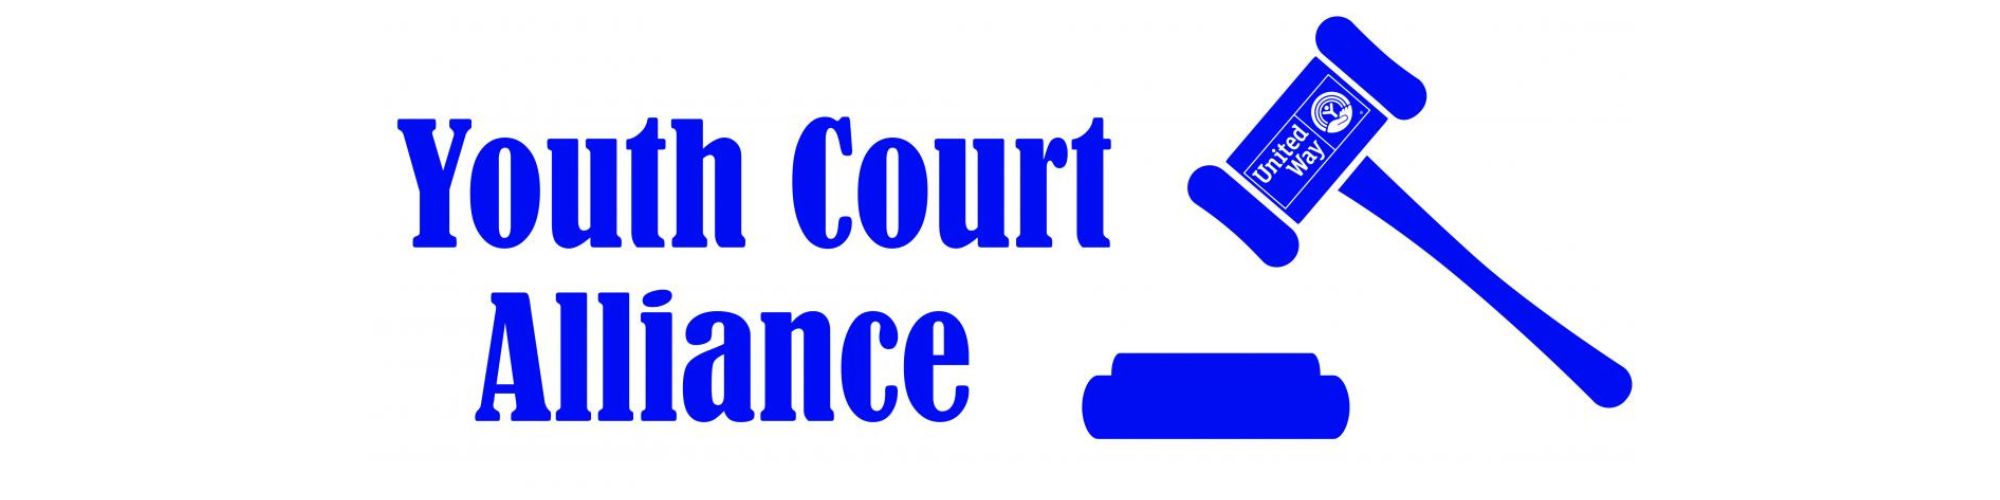 Youth court alliance logo